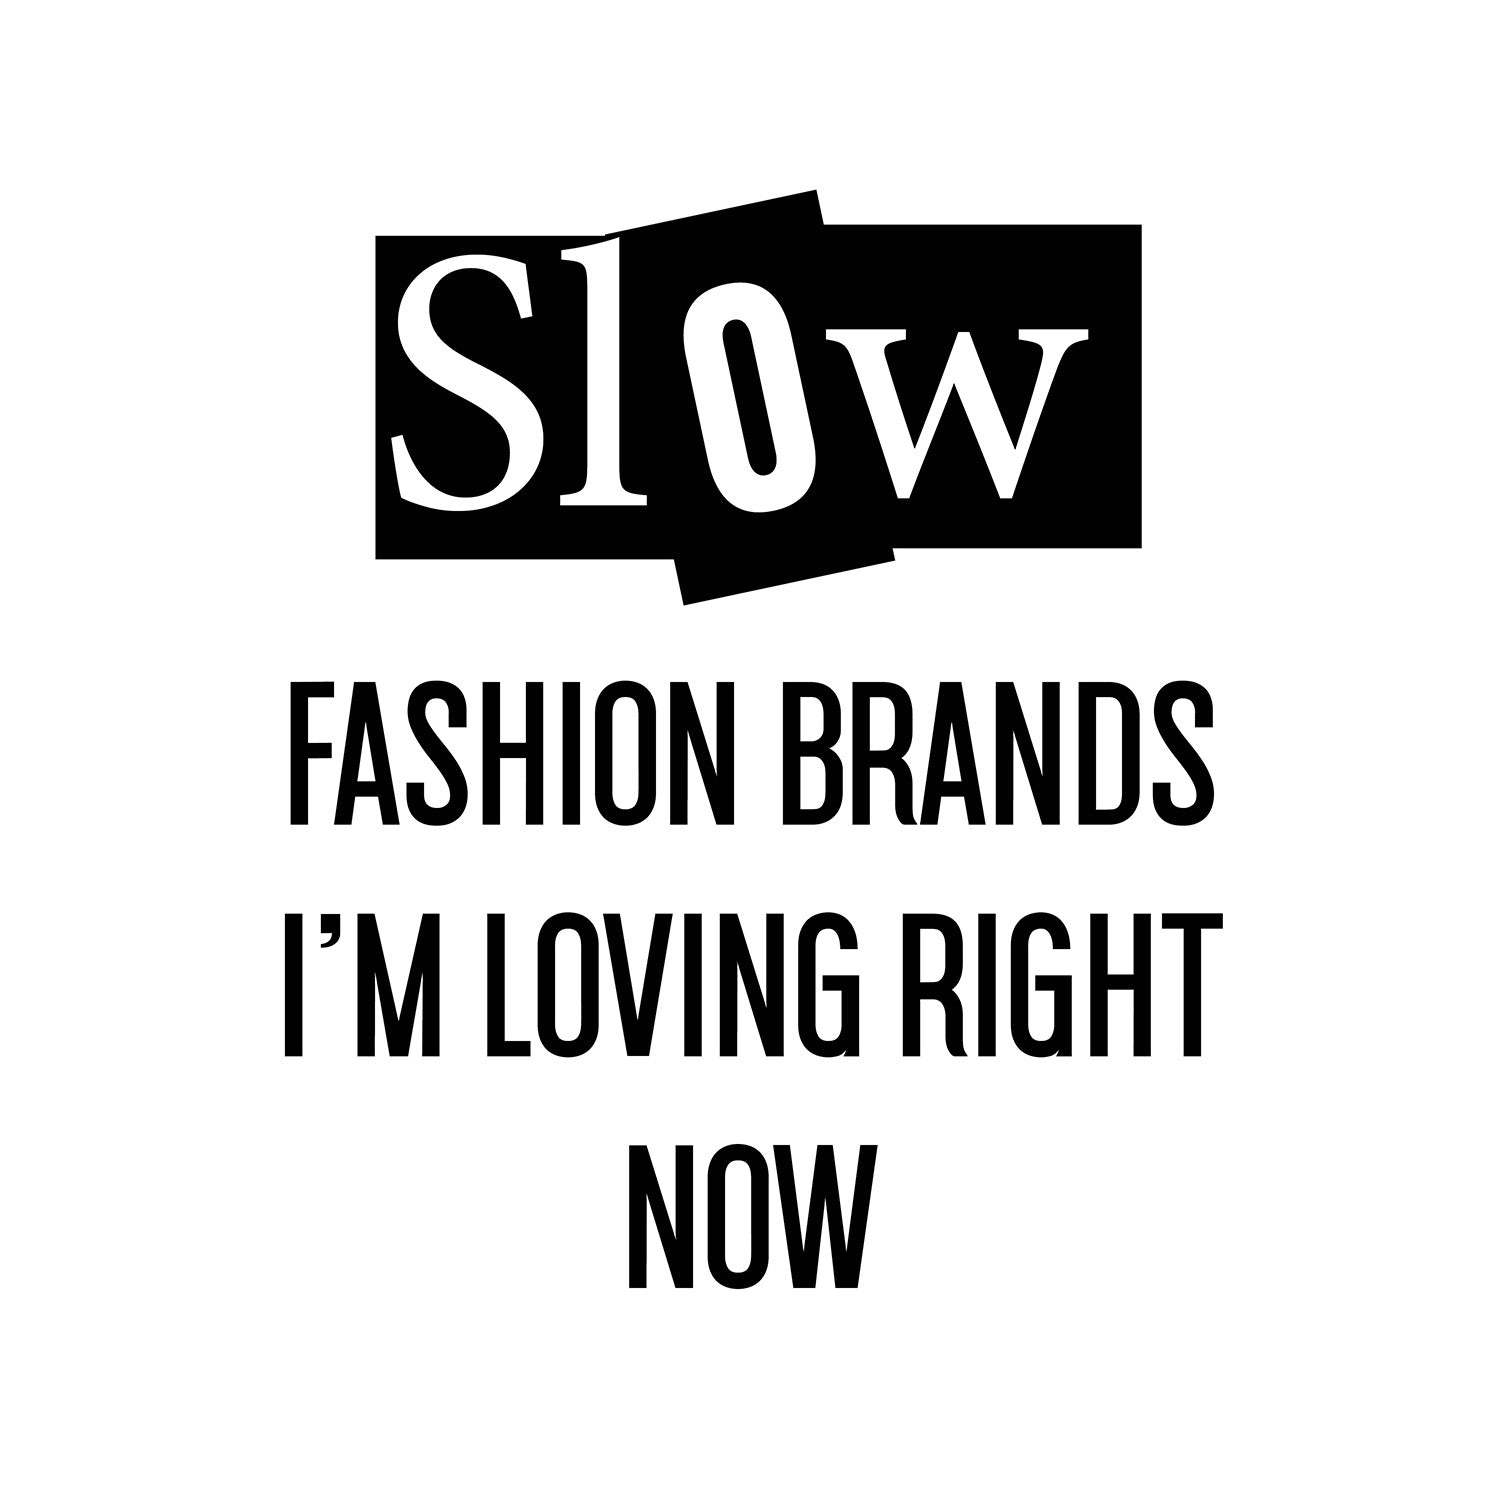 Slow Fashion Brands